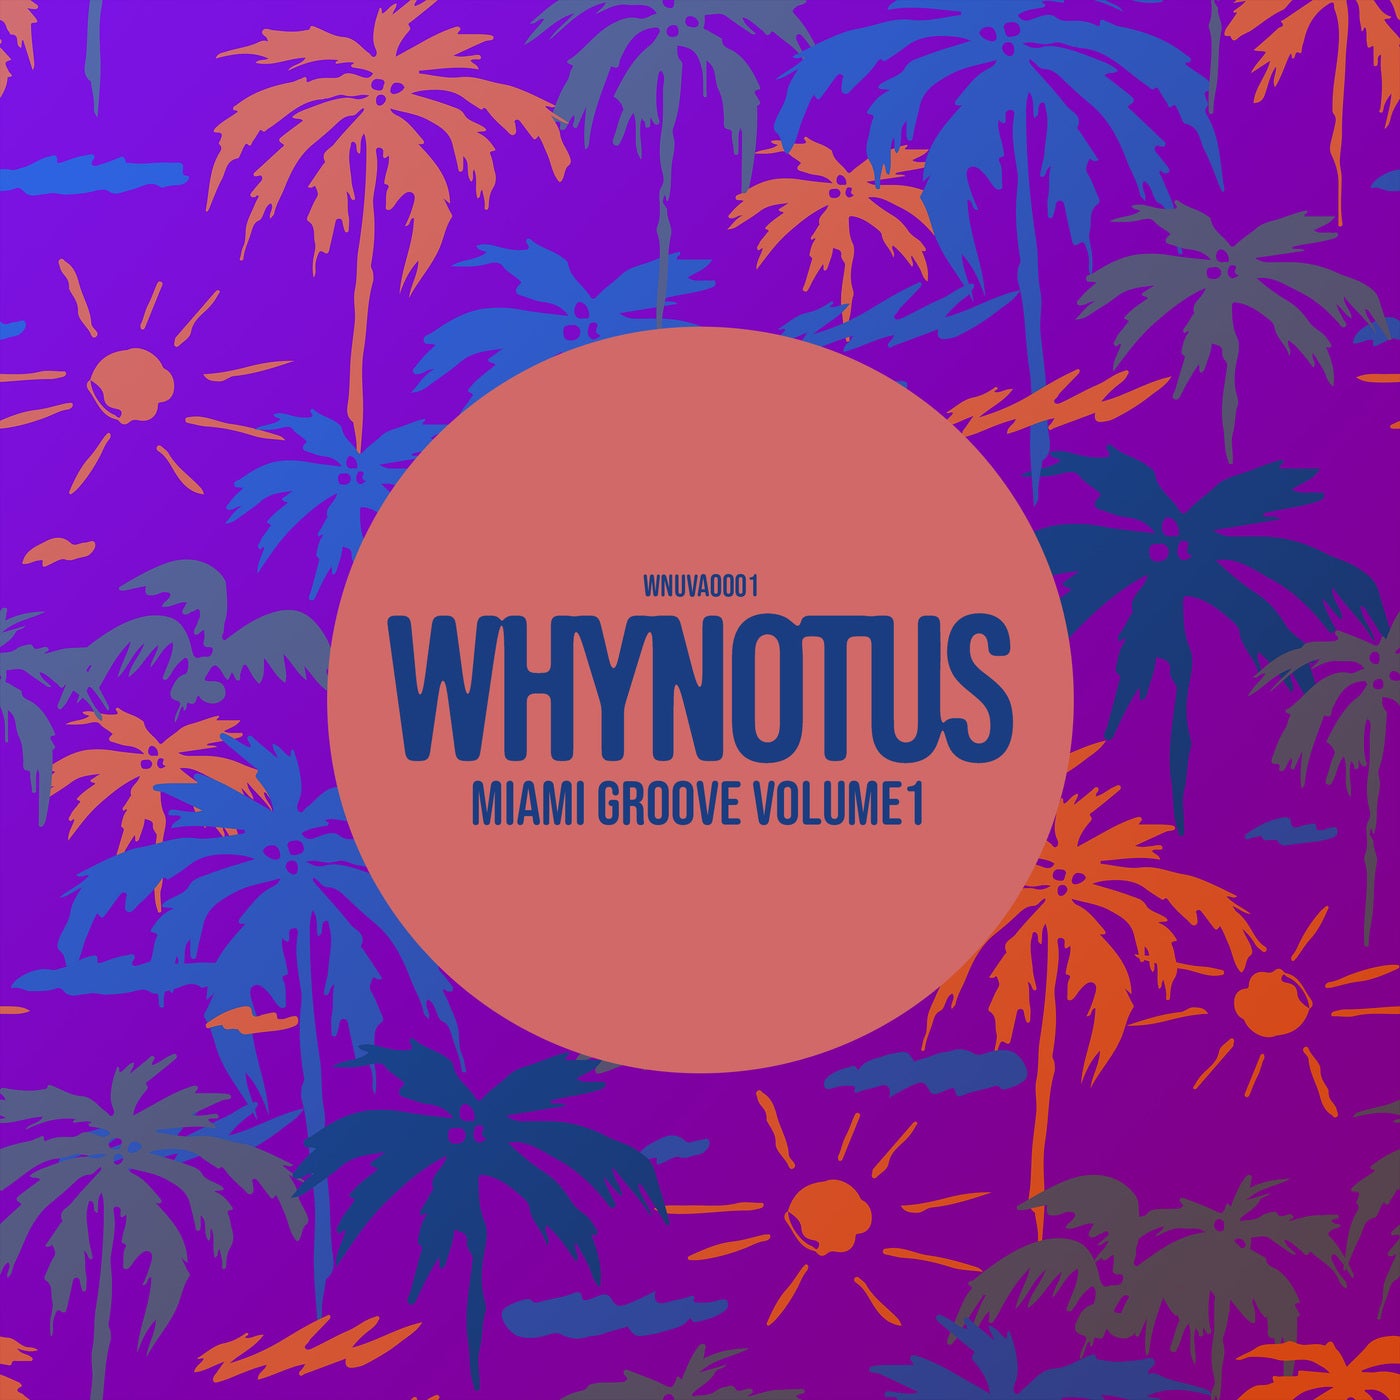 image cover: VA - Miami Groove, Vol. 1 on WHYNOTUS